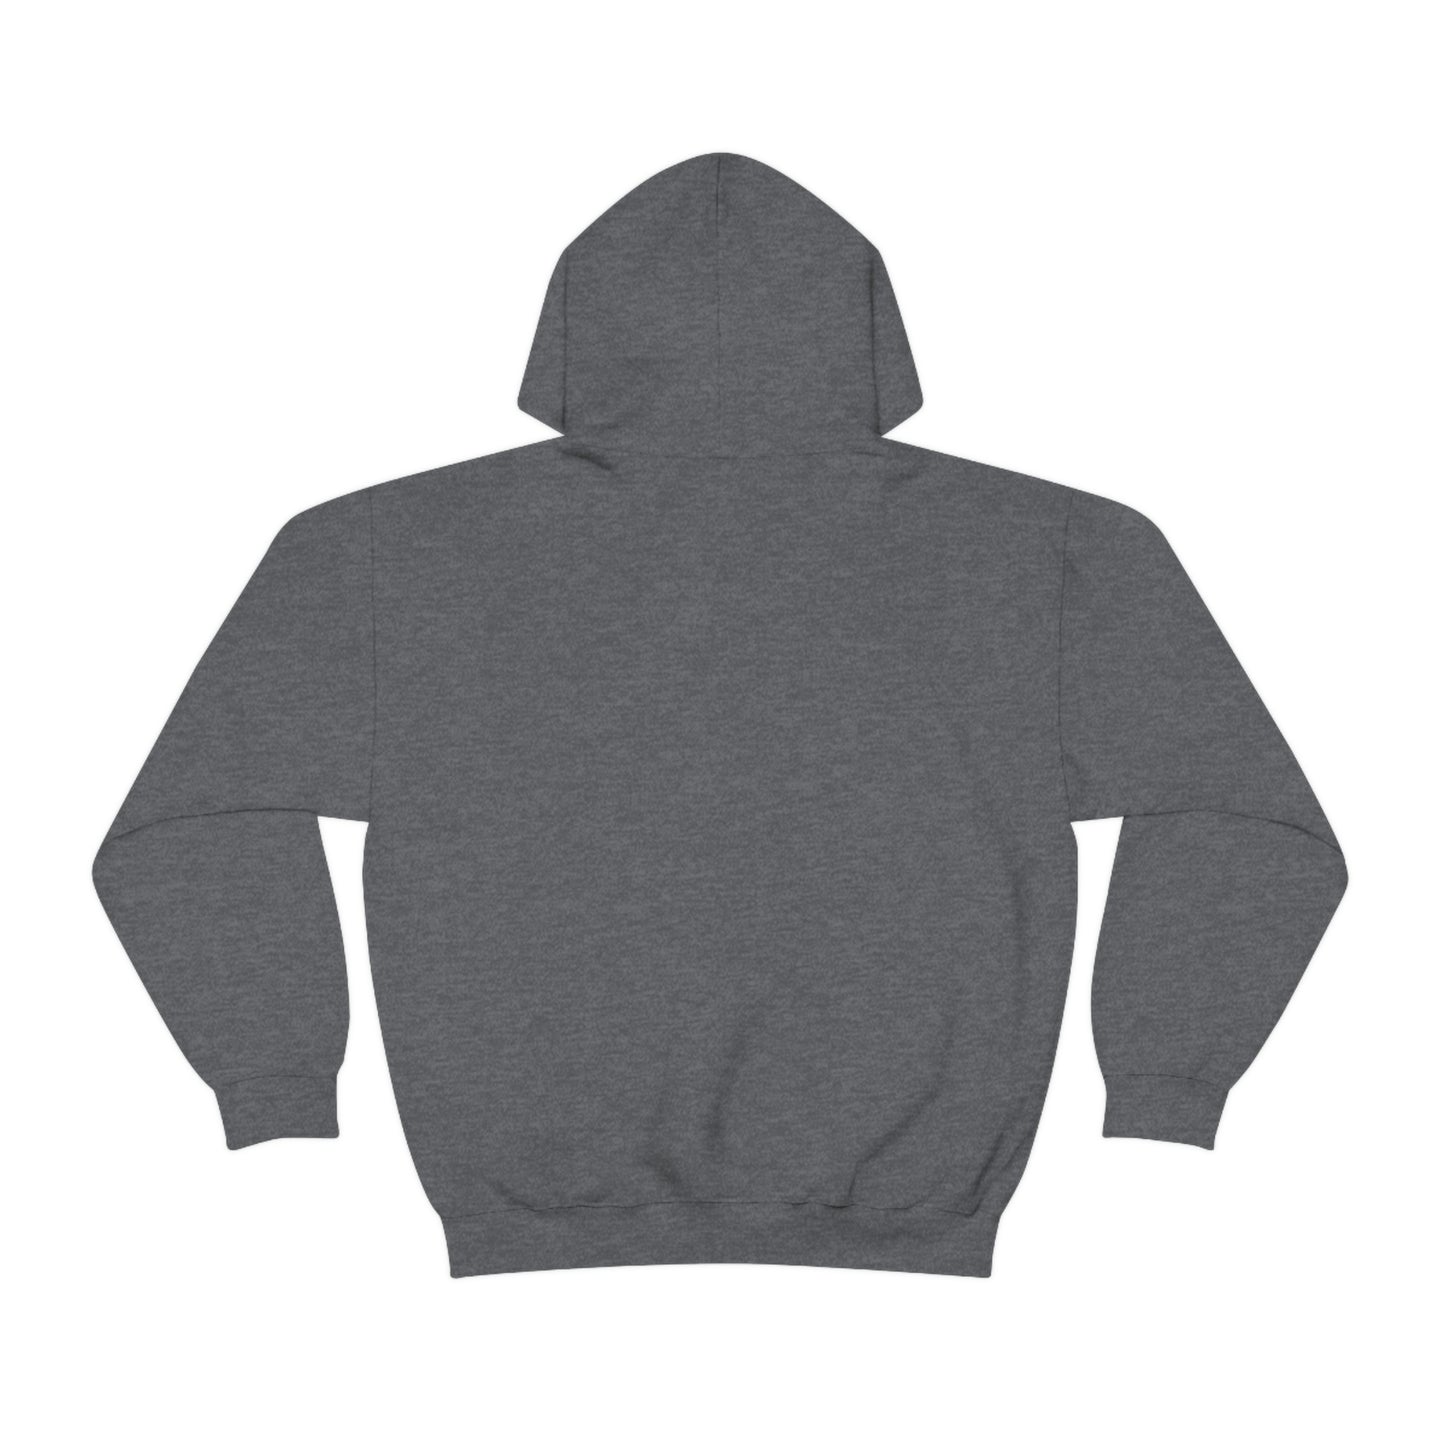 MacBeath Hardwood Heavy Blend Hooded Sweatshirt - Left Chest Logo